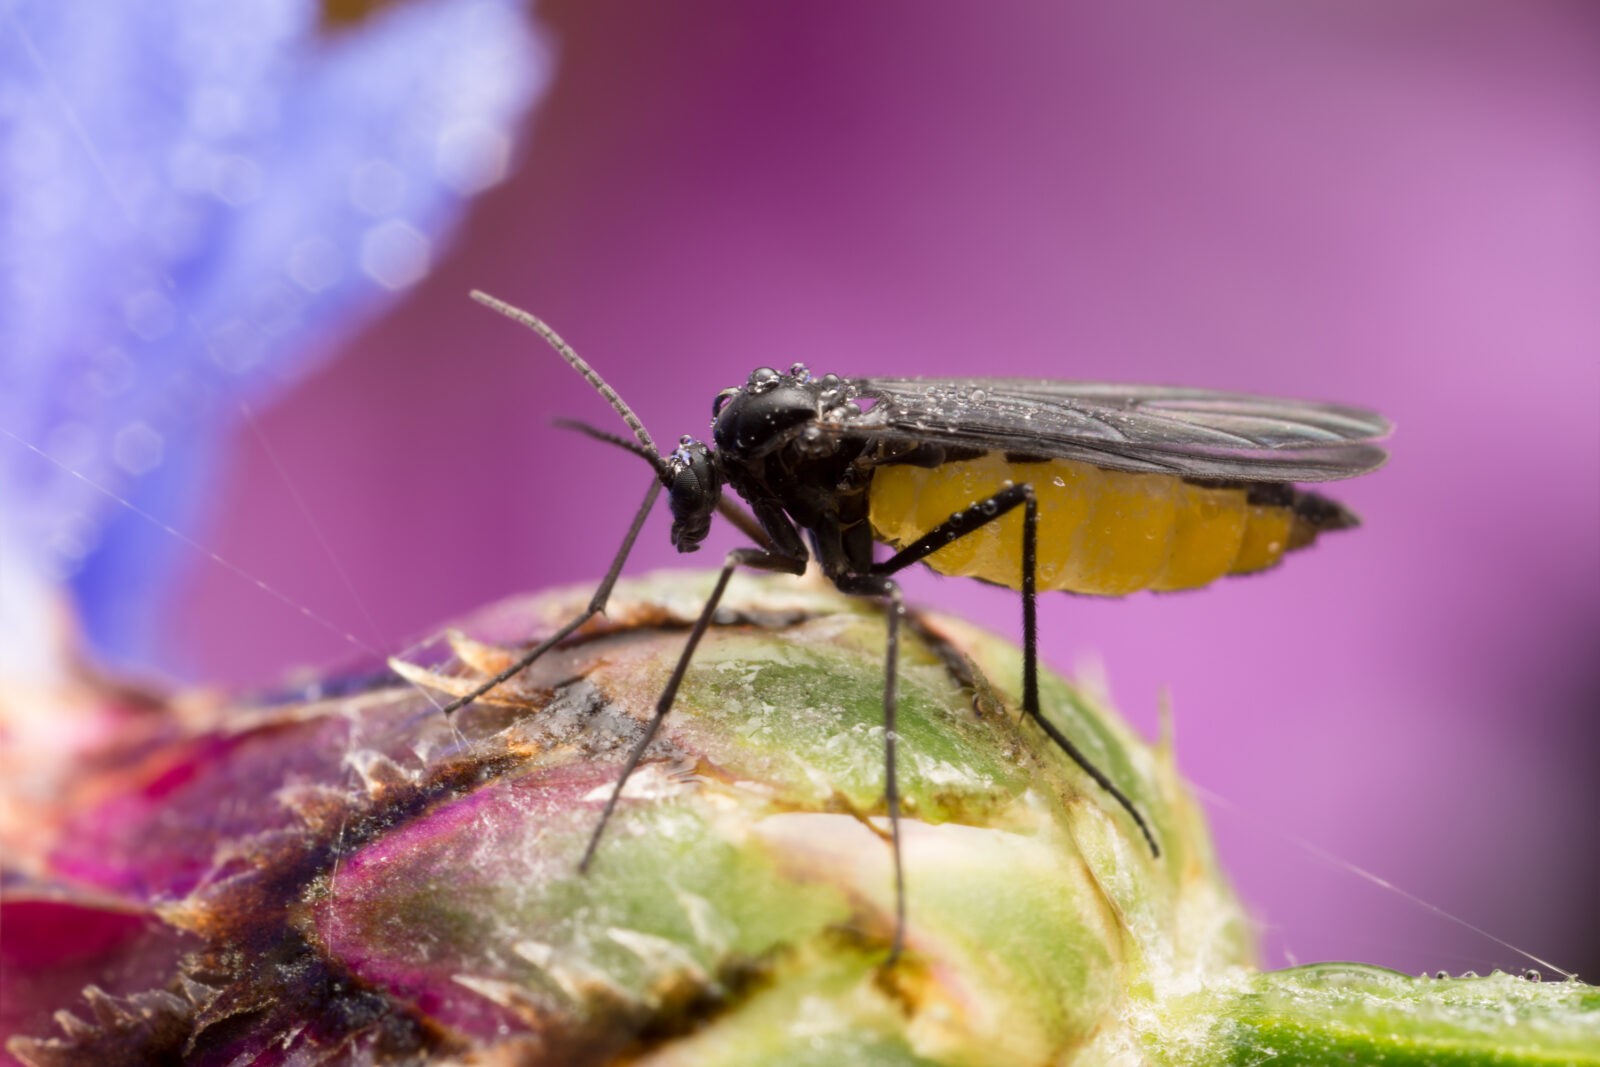 Got BSF?  Say Goodbye to Houseflies, Gnats & Fruit Flies